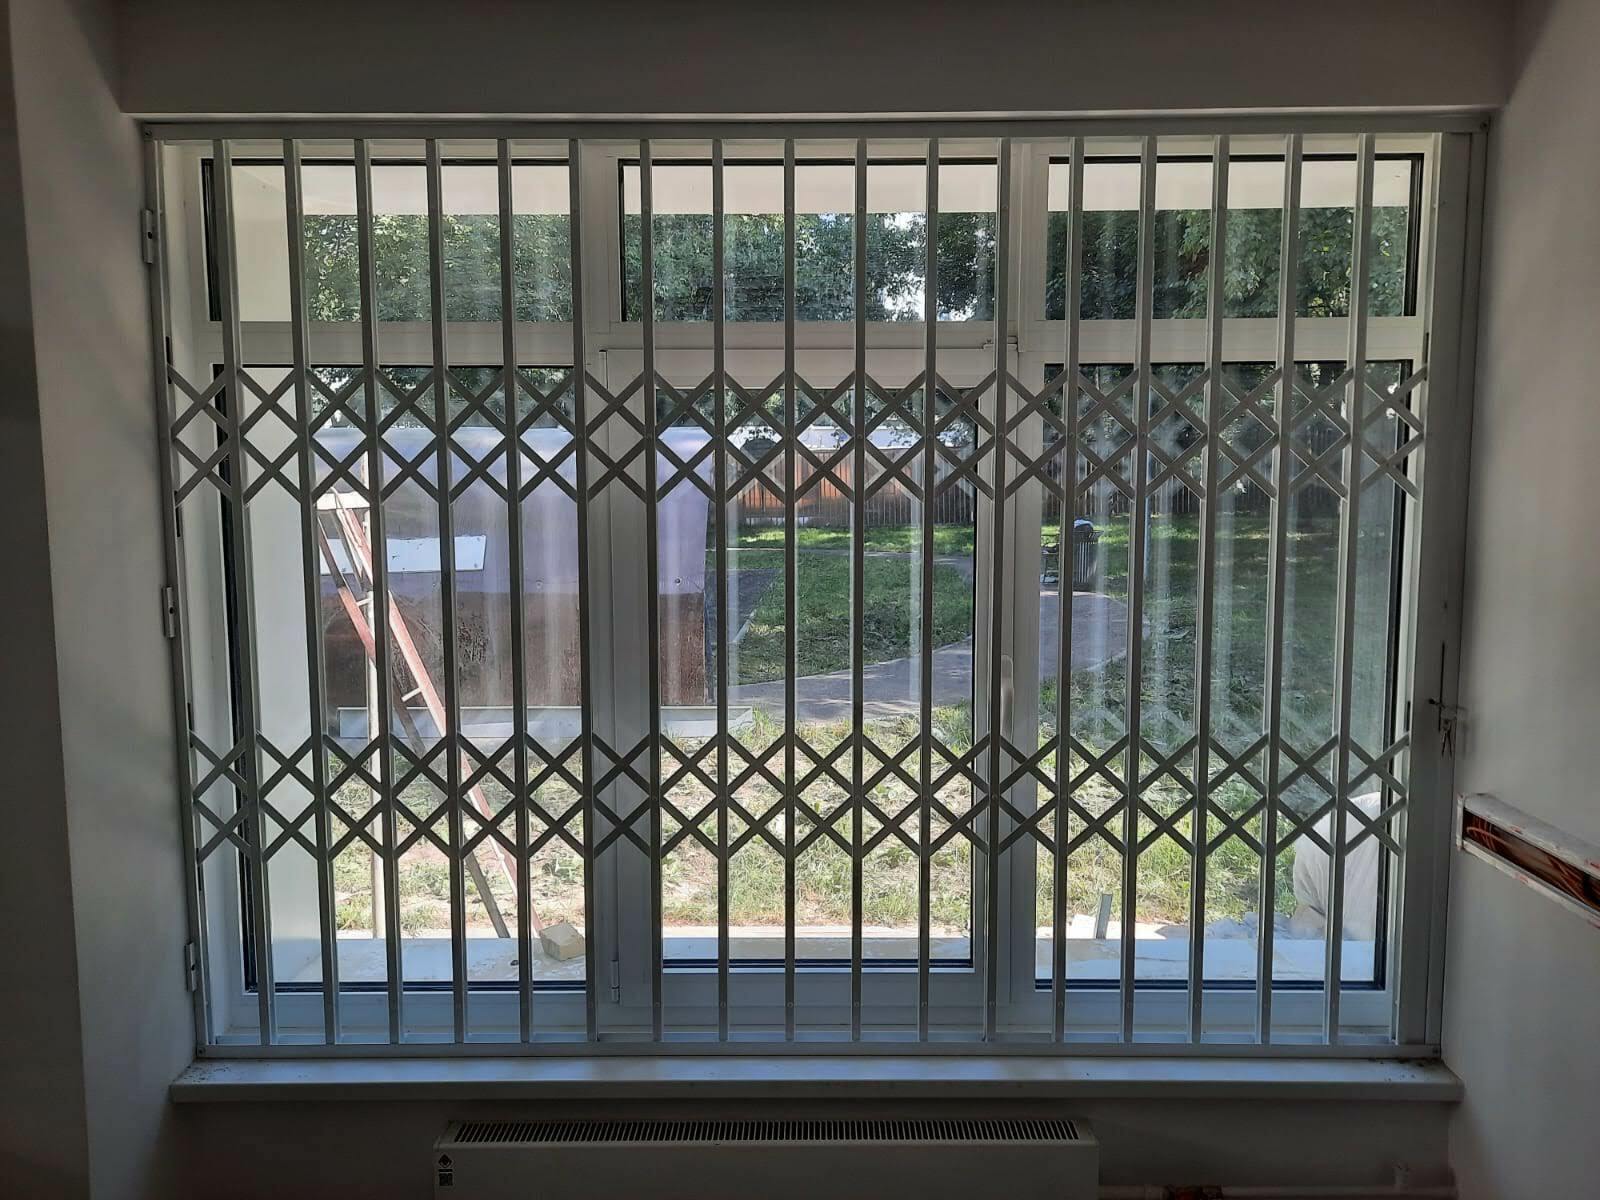 Установка металлических раздвижных решеток на окна изнутри помещения для МФЦ